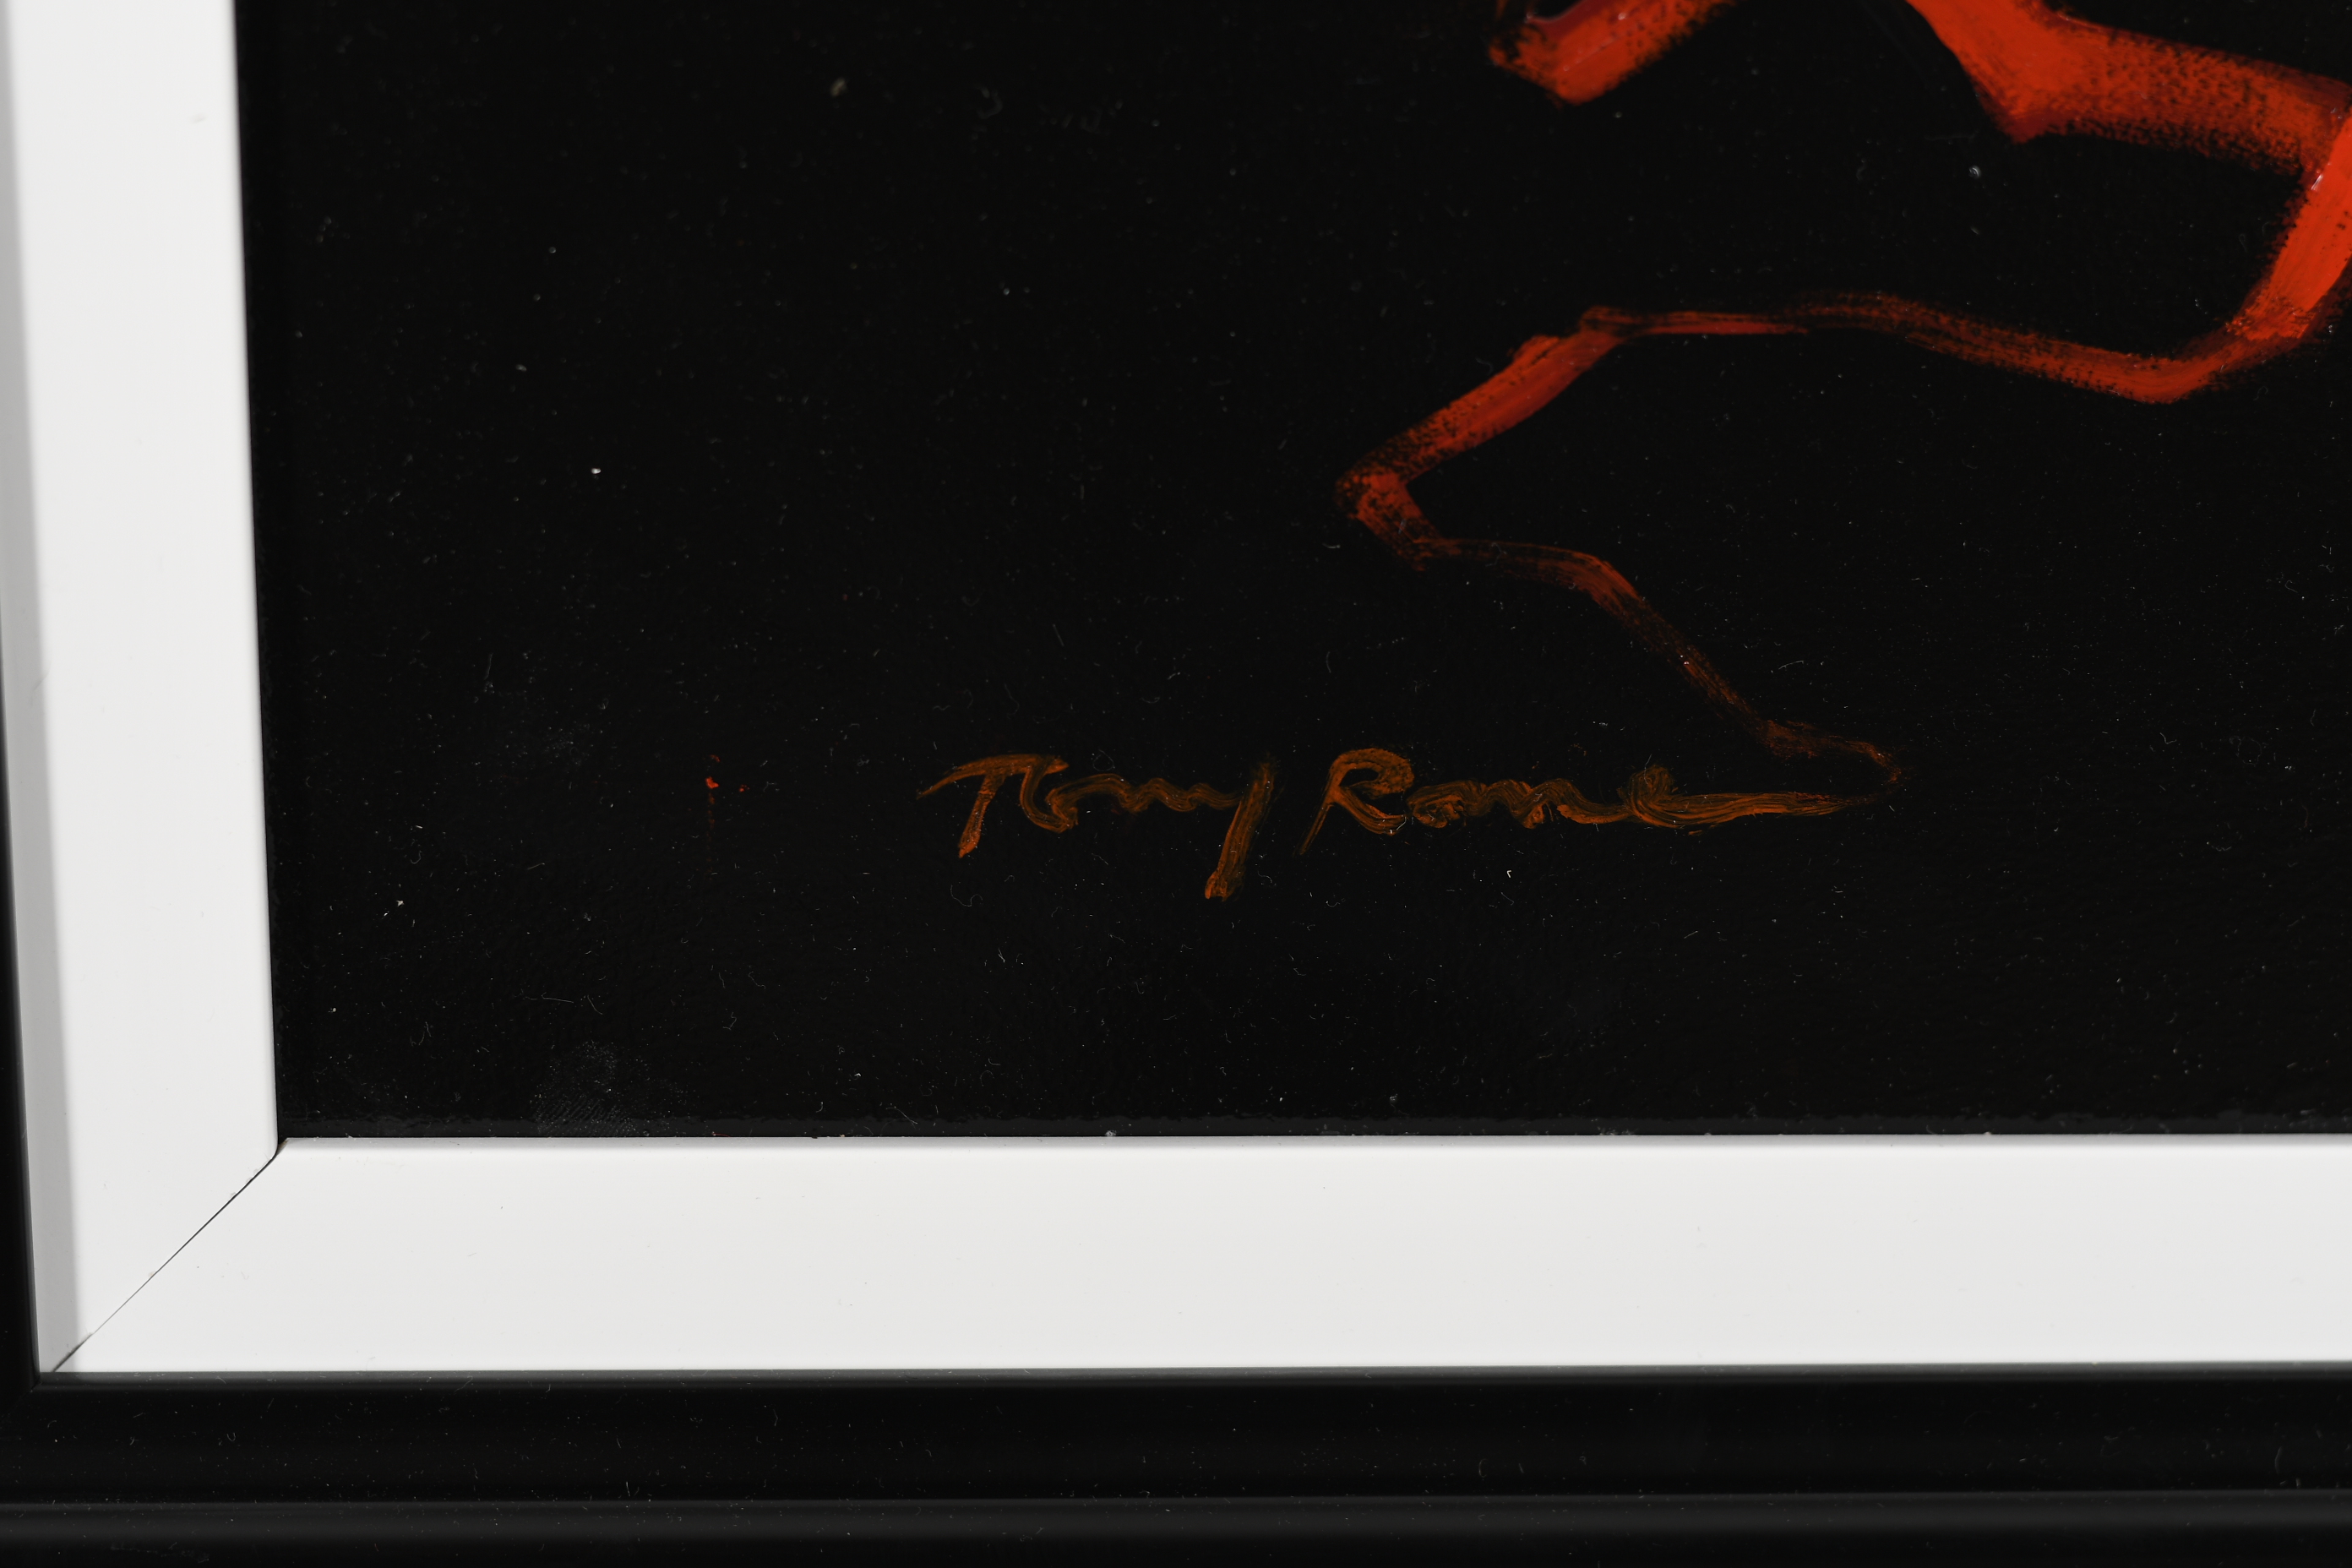 Tony Rome Stunning Original Oil Painting - Image 7 of 8